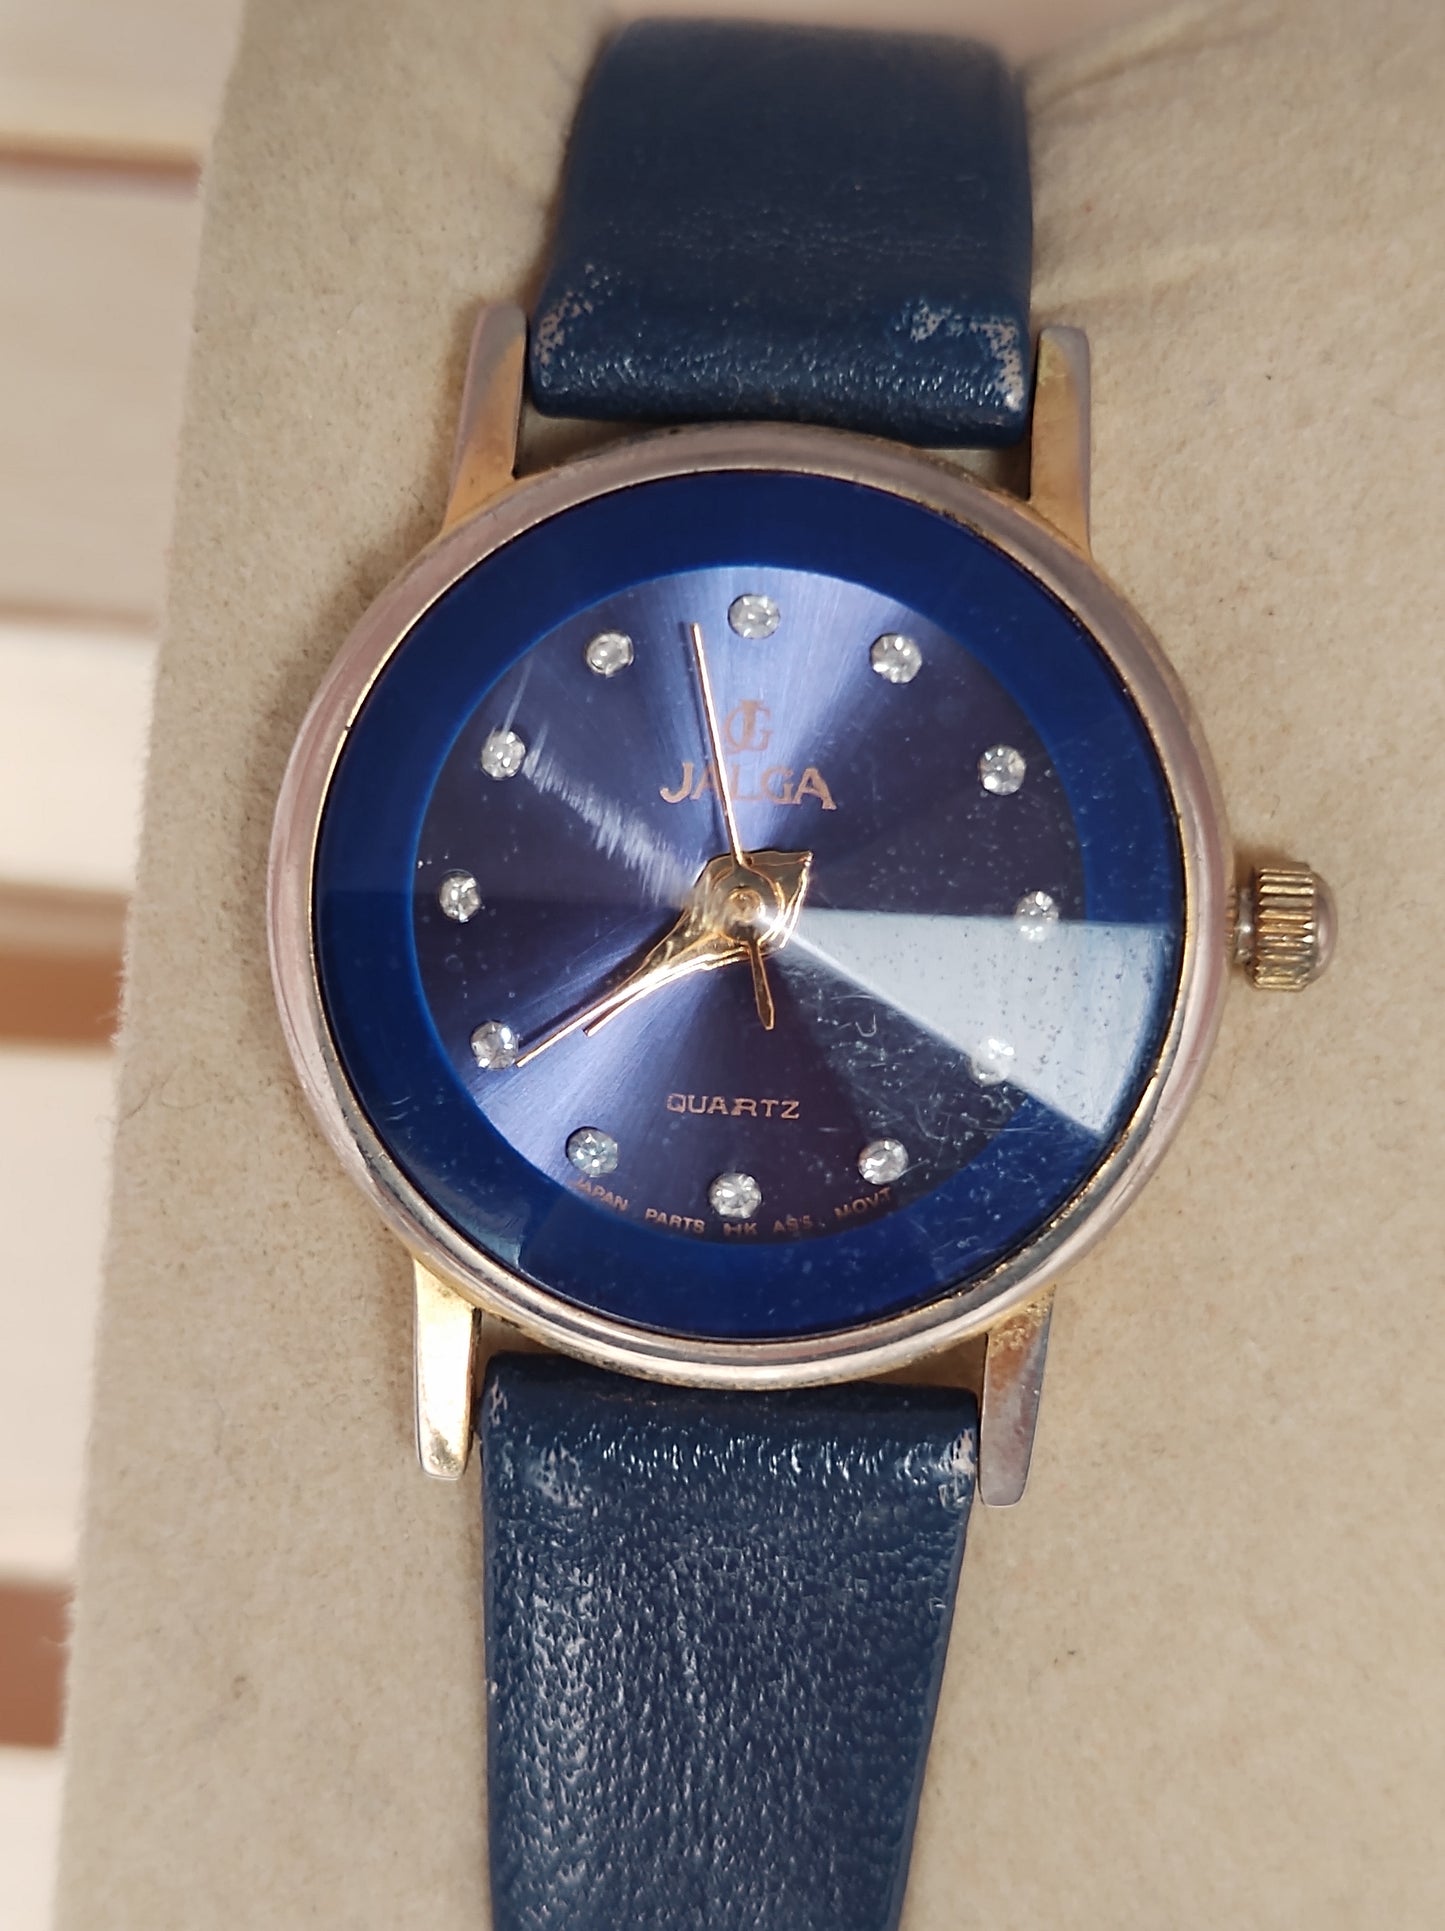 Jagla pre-owned Quartz watch